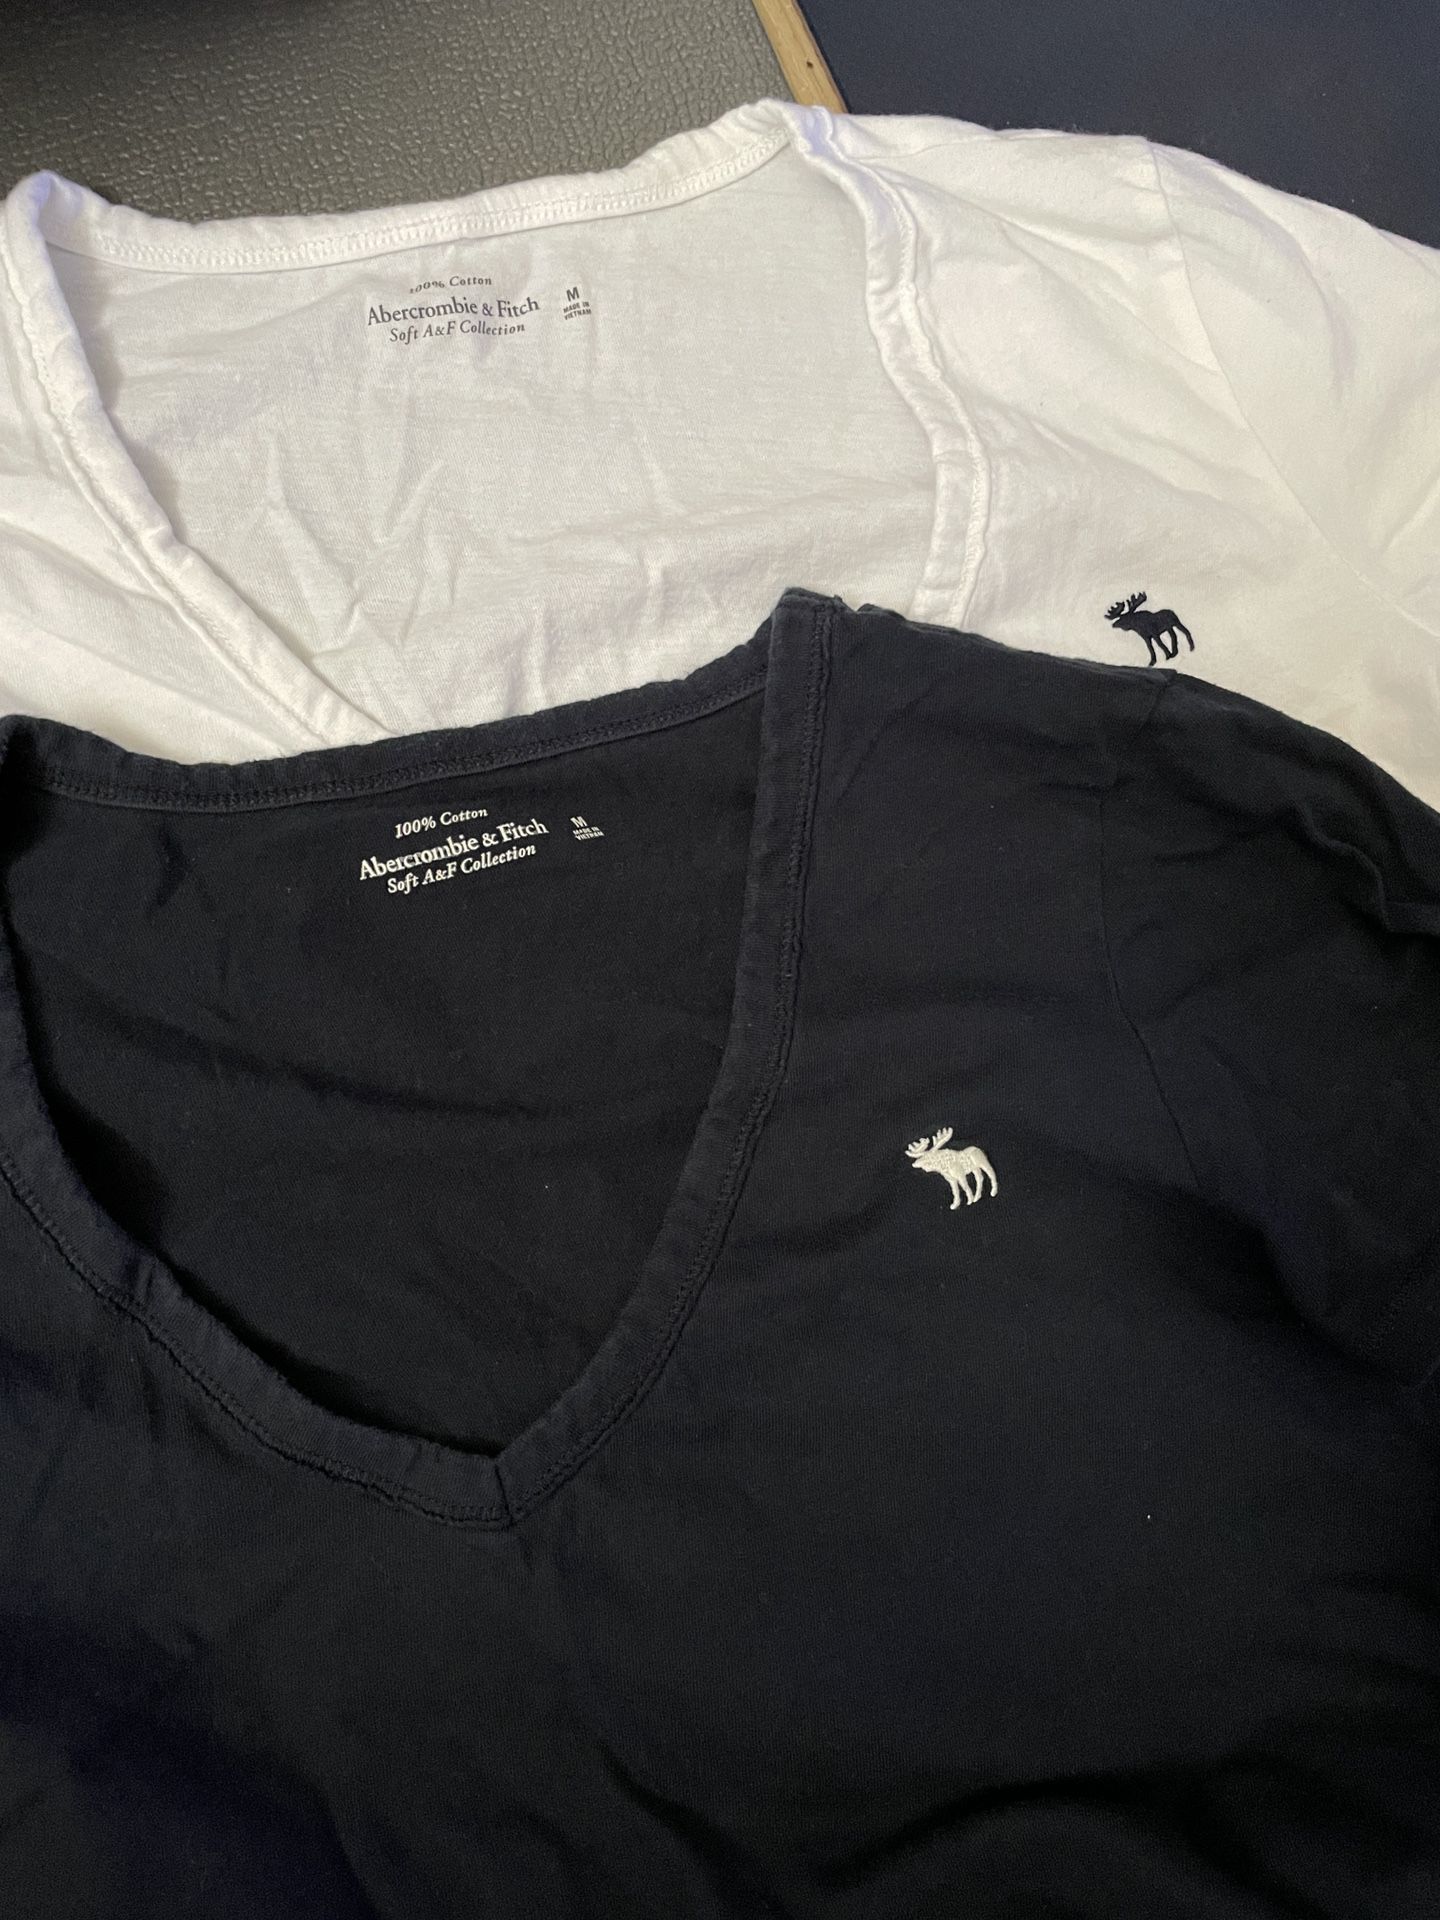 Abercrombie T Shirt (Dark Blue & White) Medium